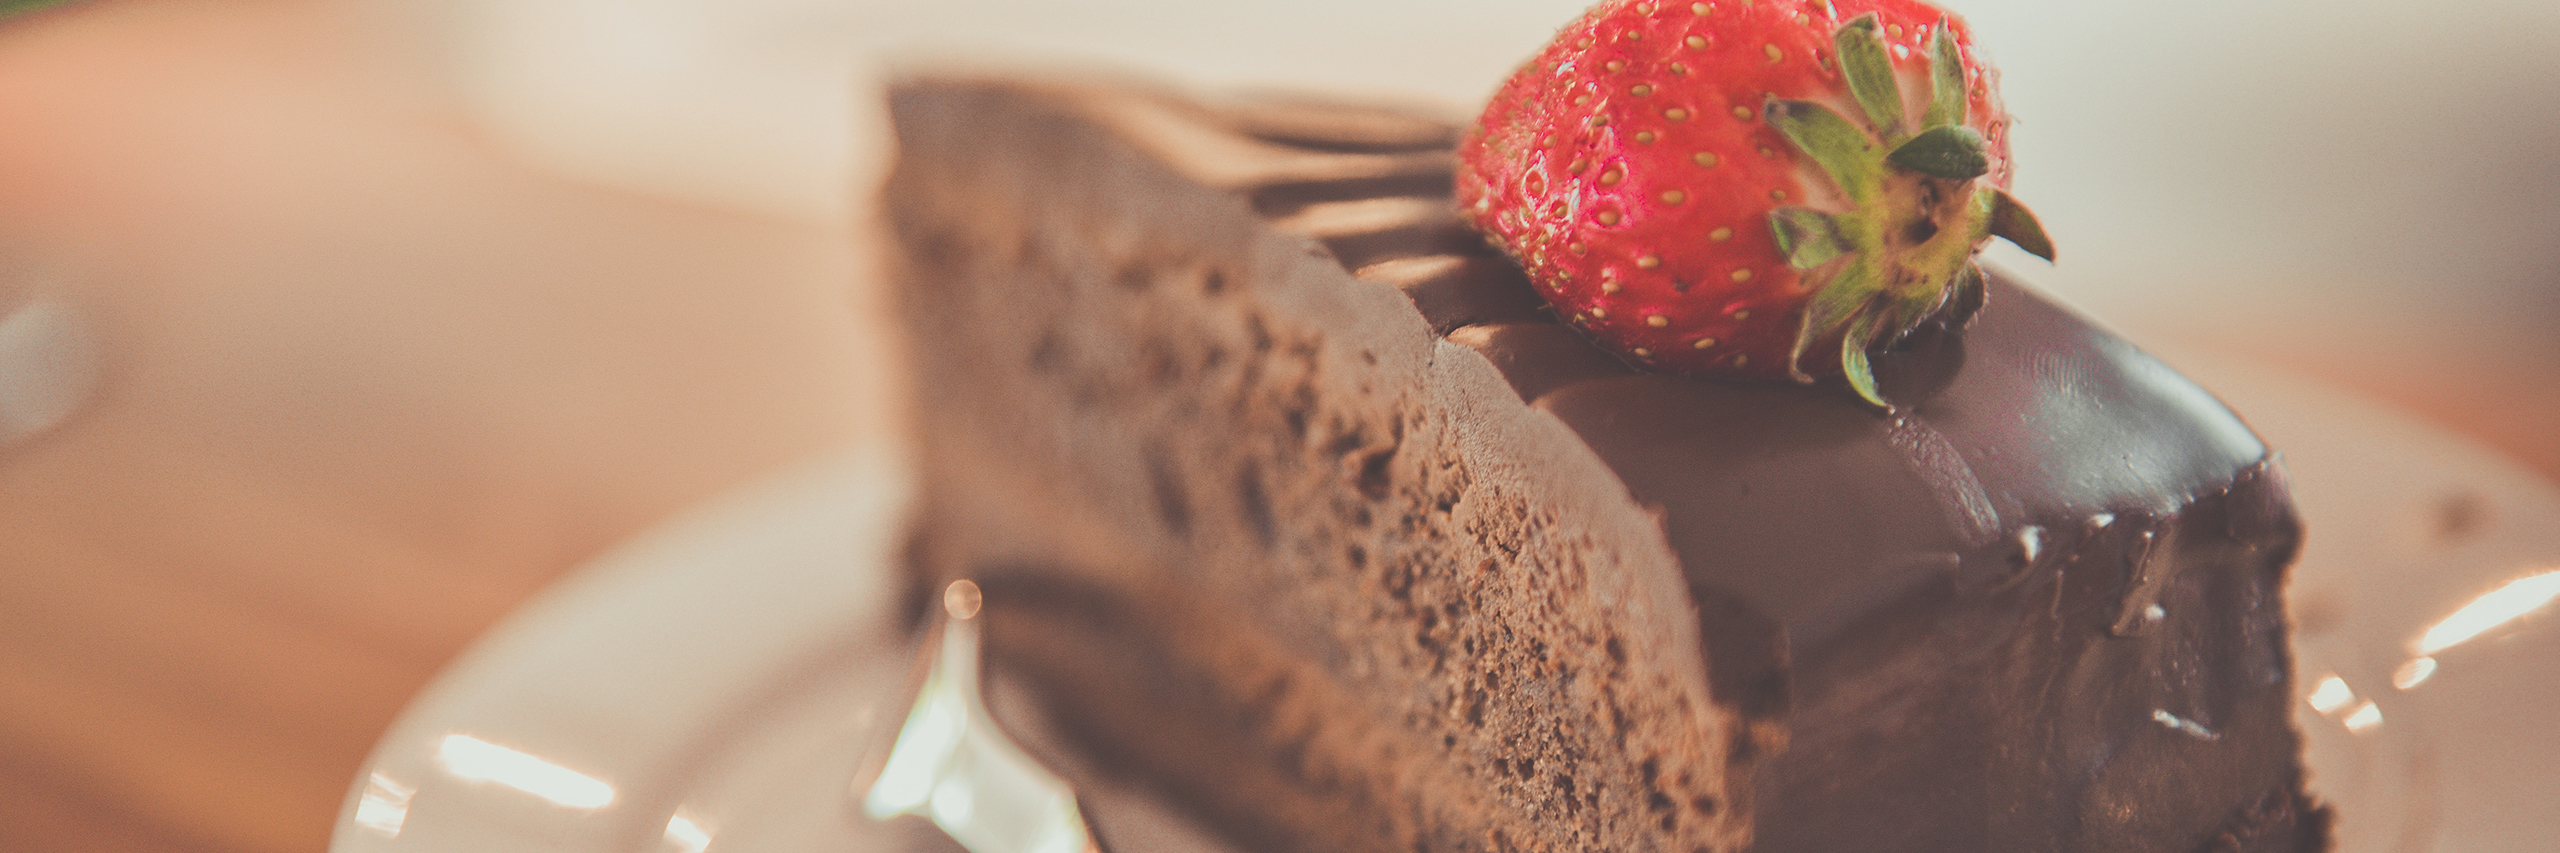 Chocolate cake unhealthy vegan